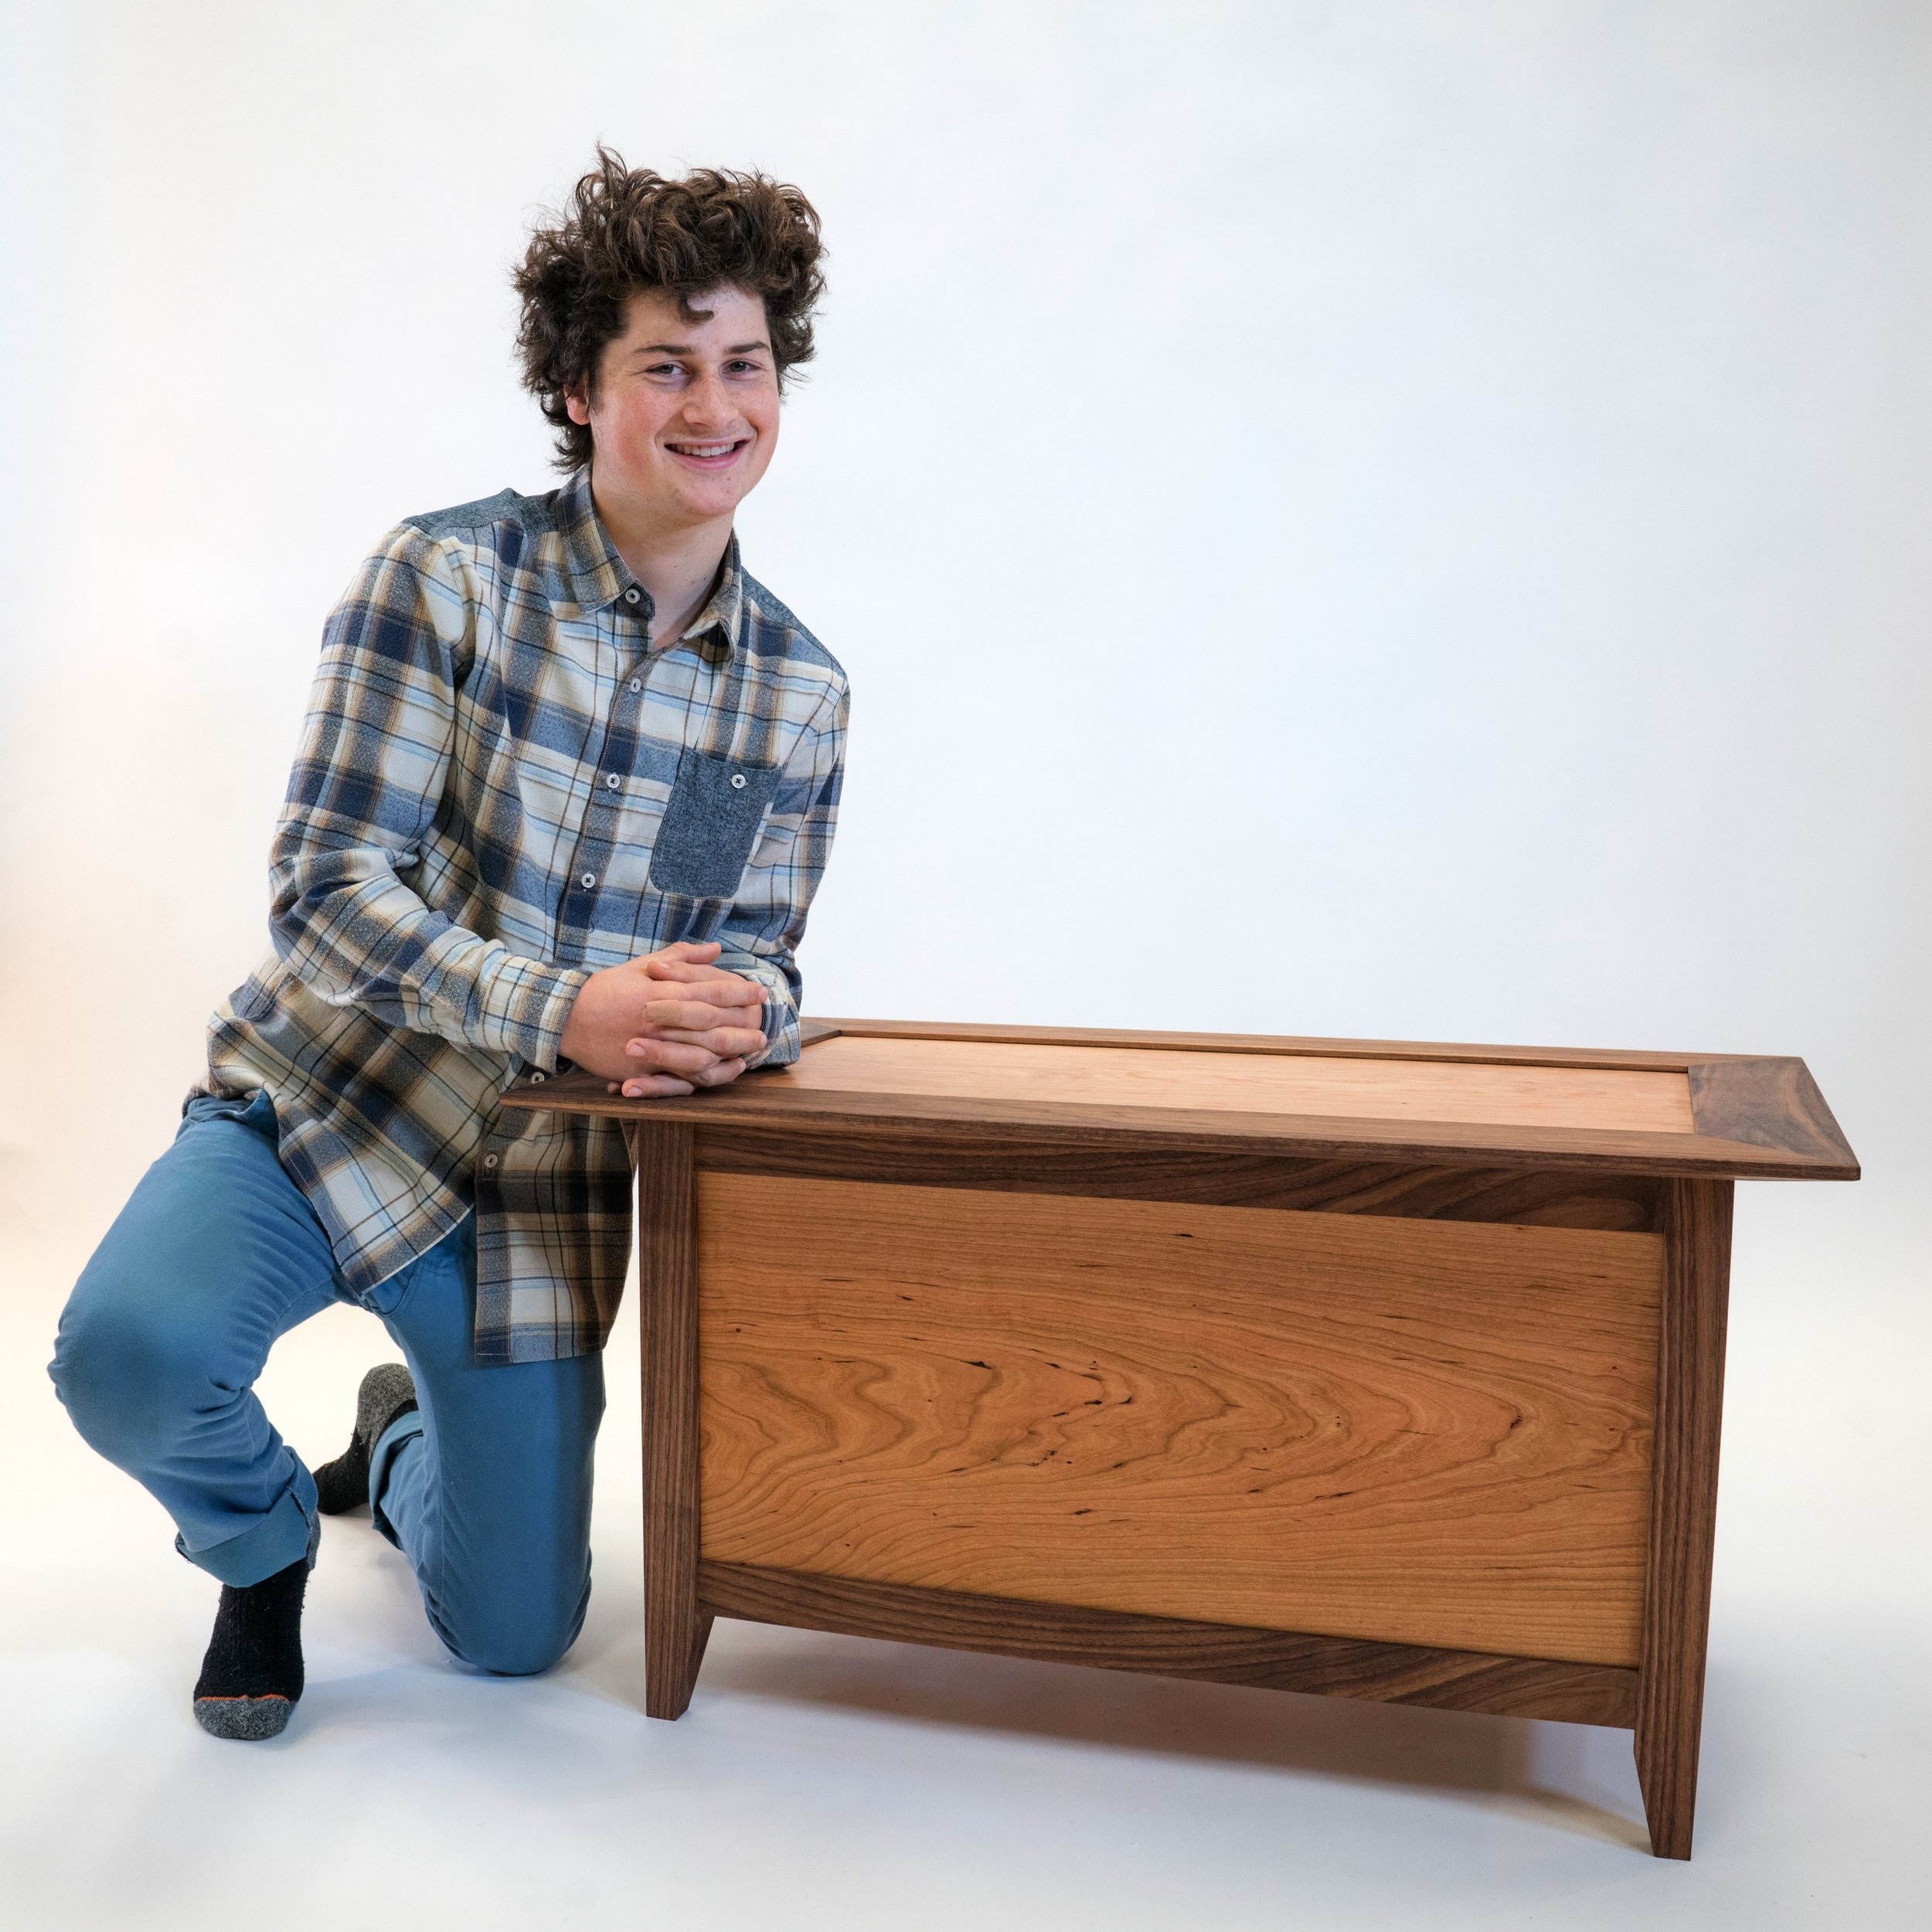 Garrett Kitchen, Foundations of Woodworking Graduate